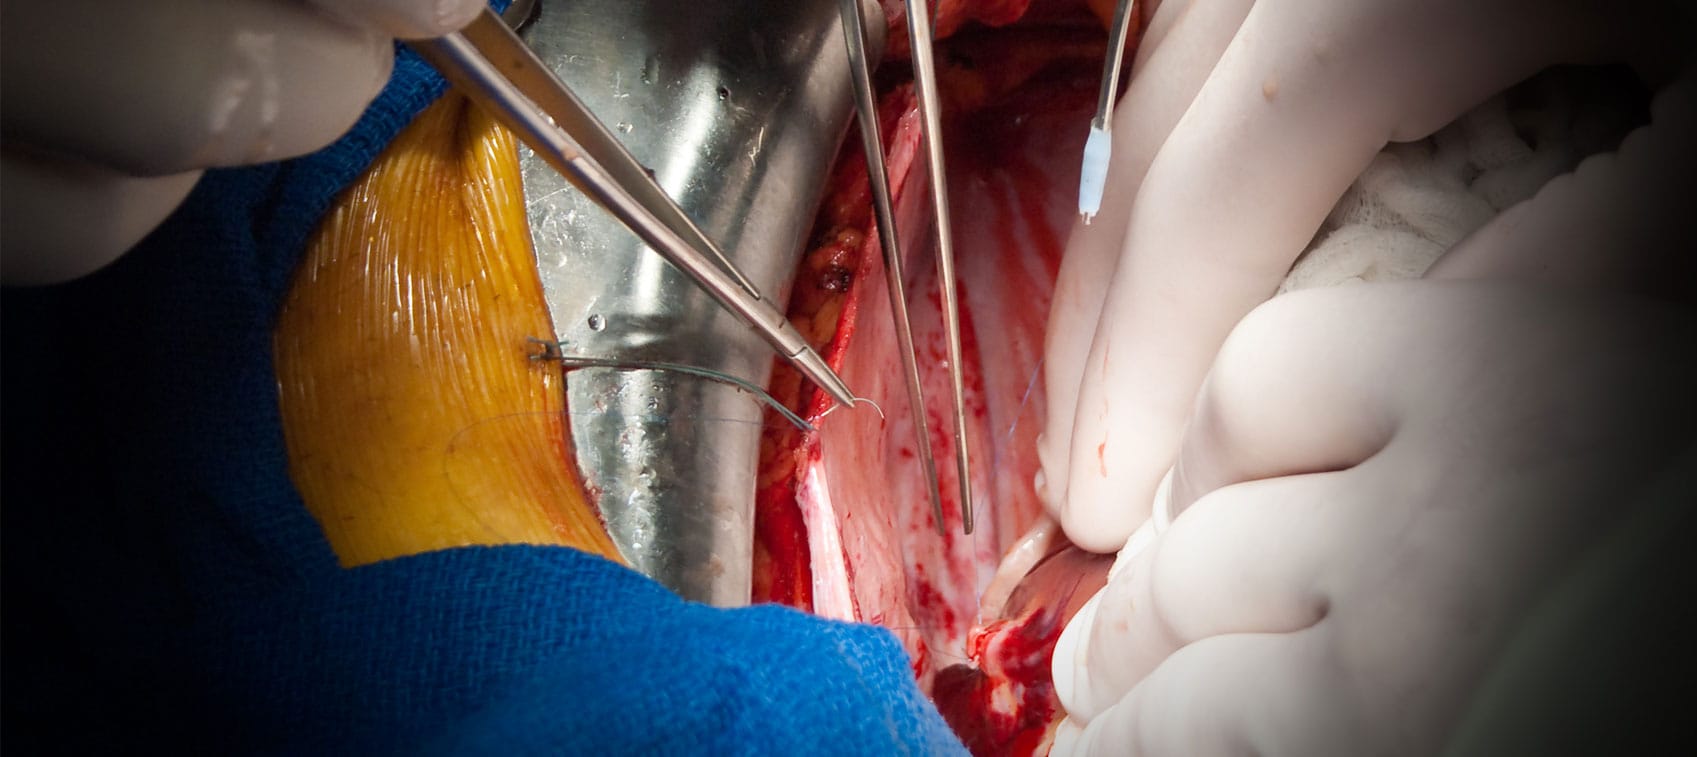 Critical Analysis of Coronary Artery Bypass Graft Surgery: A 30